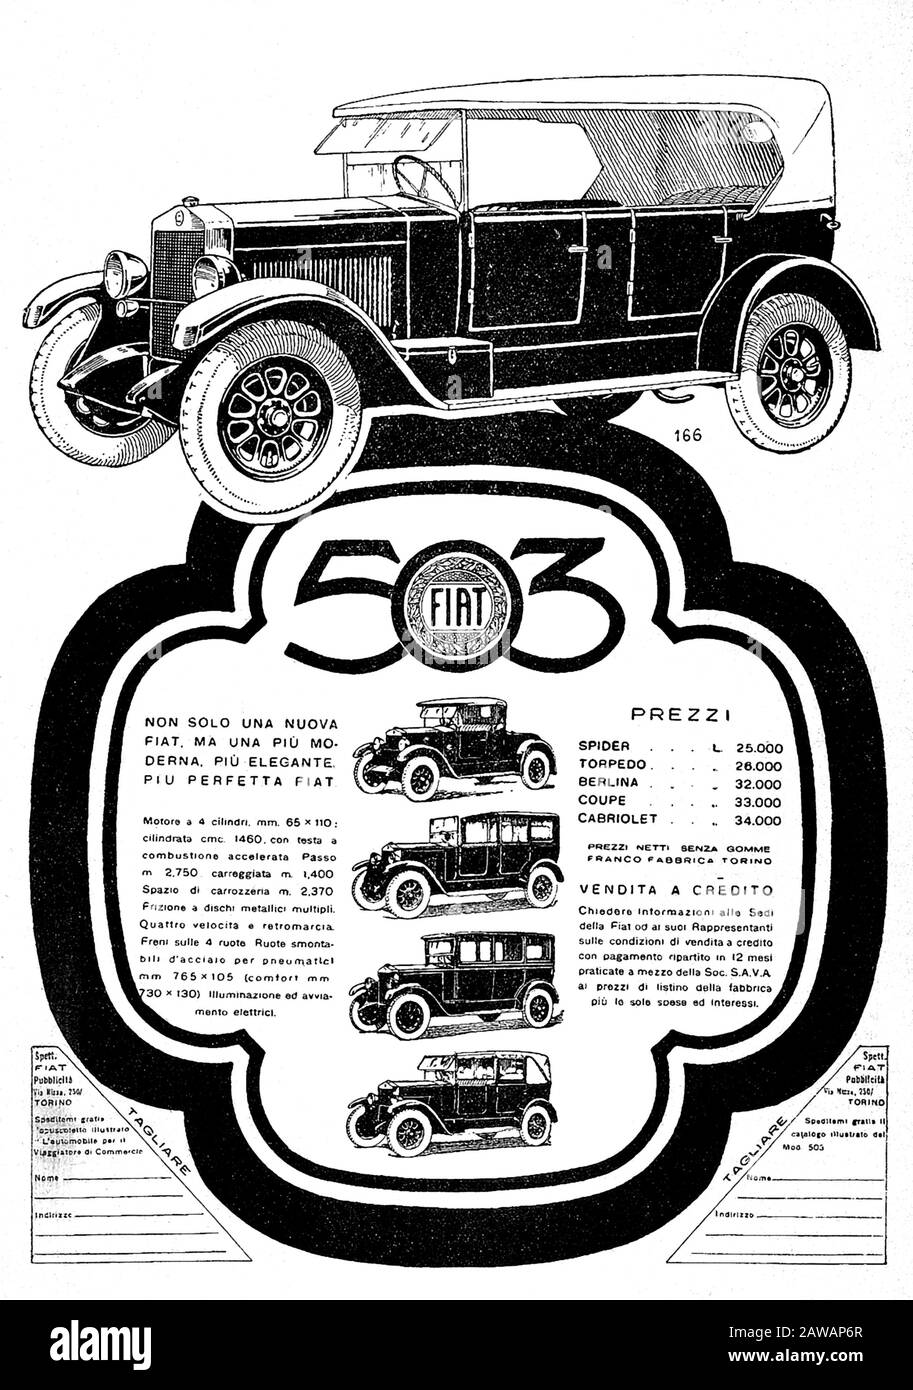 1926 , ITALY : The italian car industry FIAT ( F.I.A.T. Fabbrica Italiana Automobili Torino ) advertising for FIAT 503 model  - GIANNI AGNELLI - autom Stock Photo